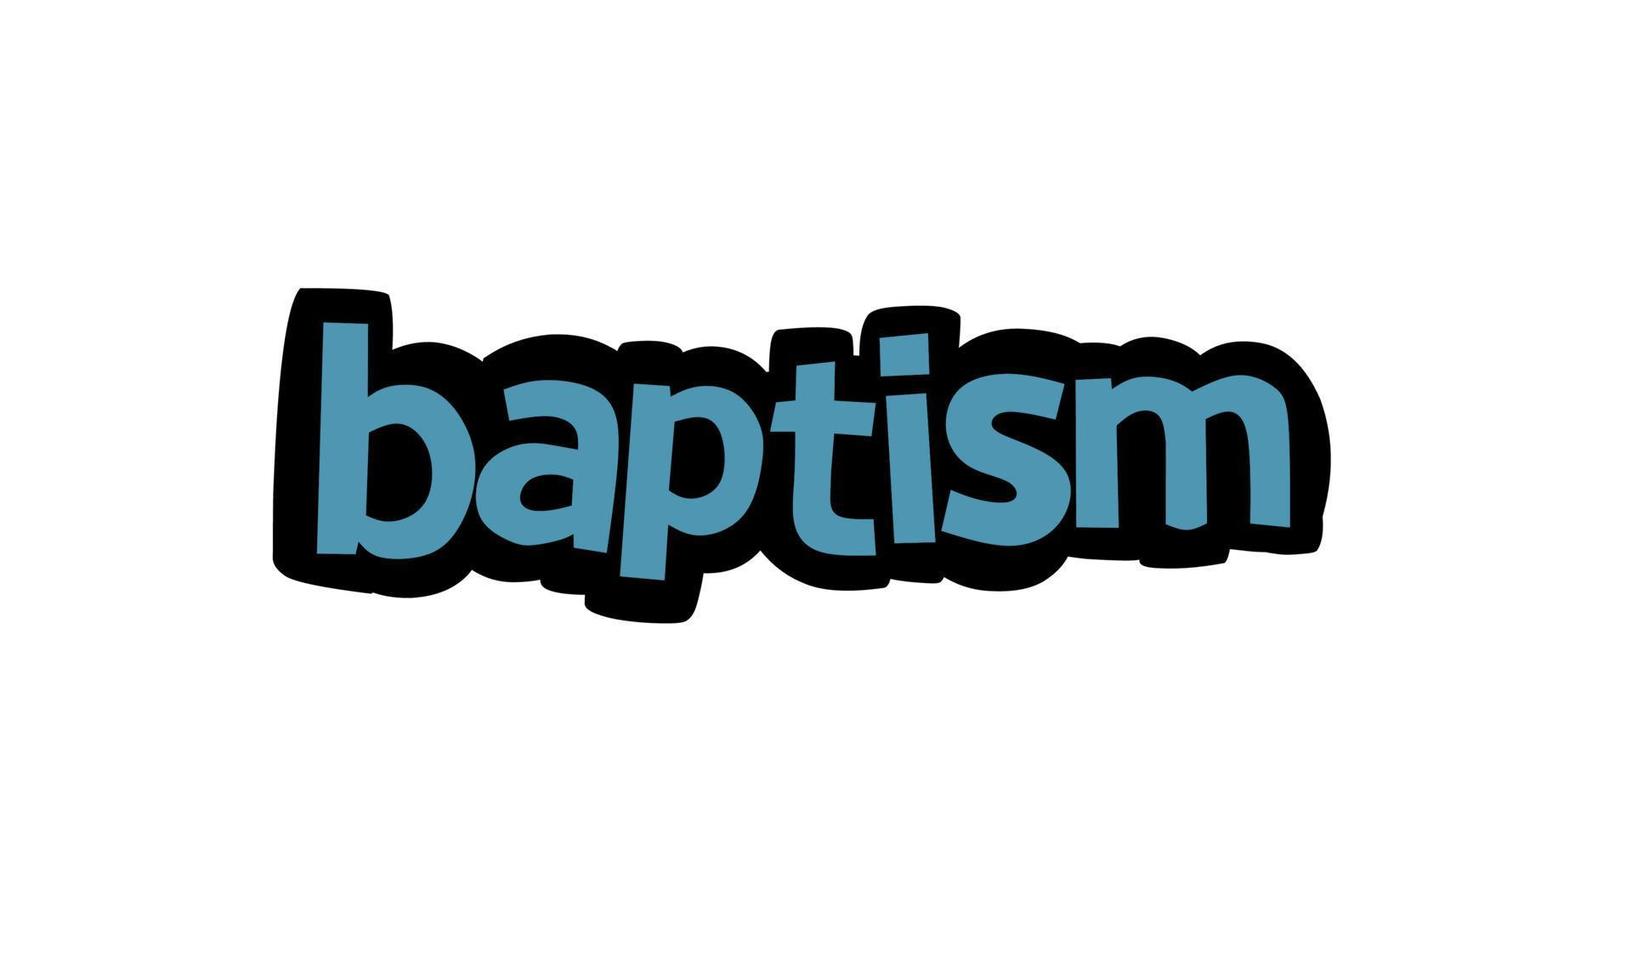 BAPTISM writing vector design on white background